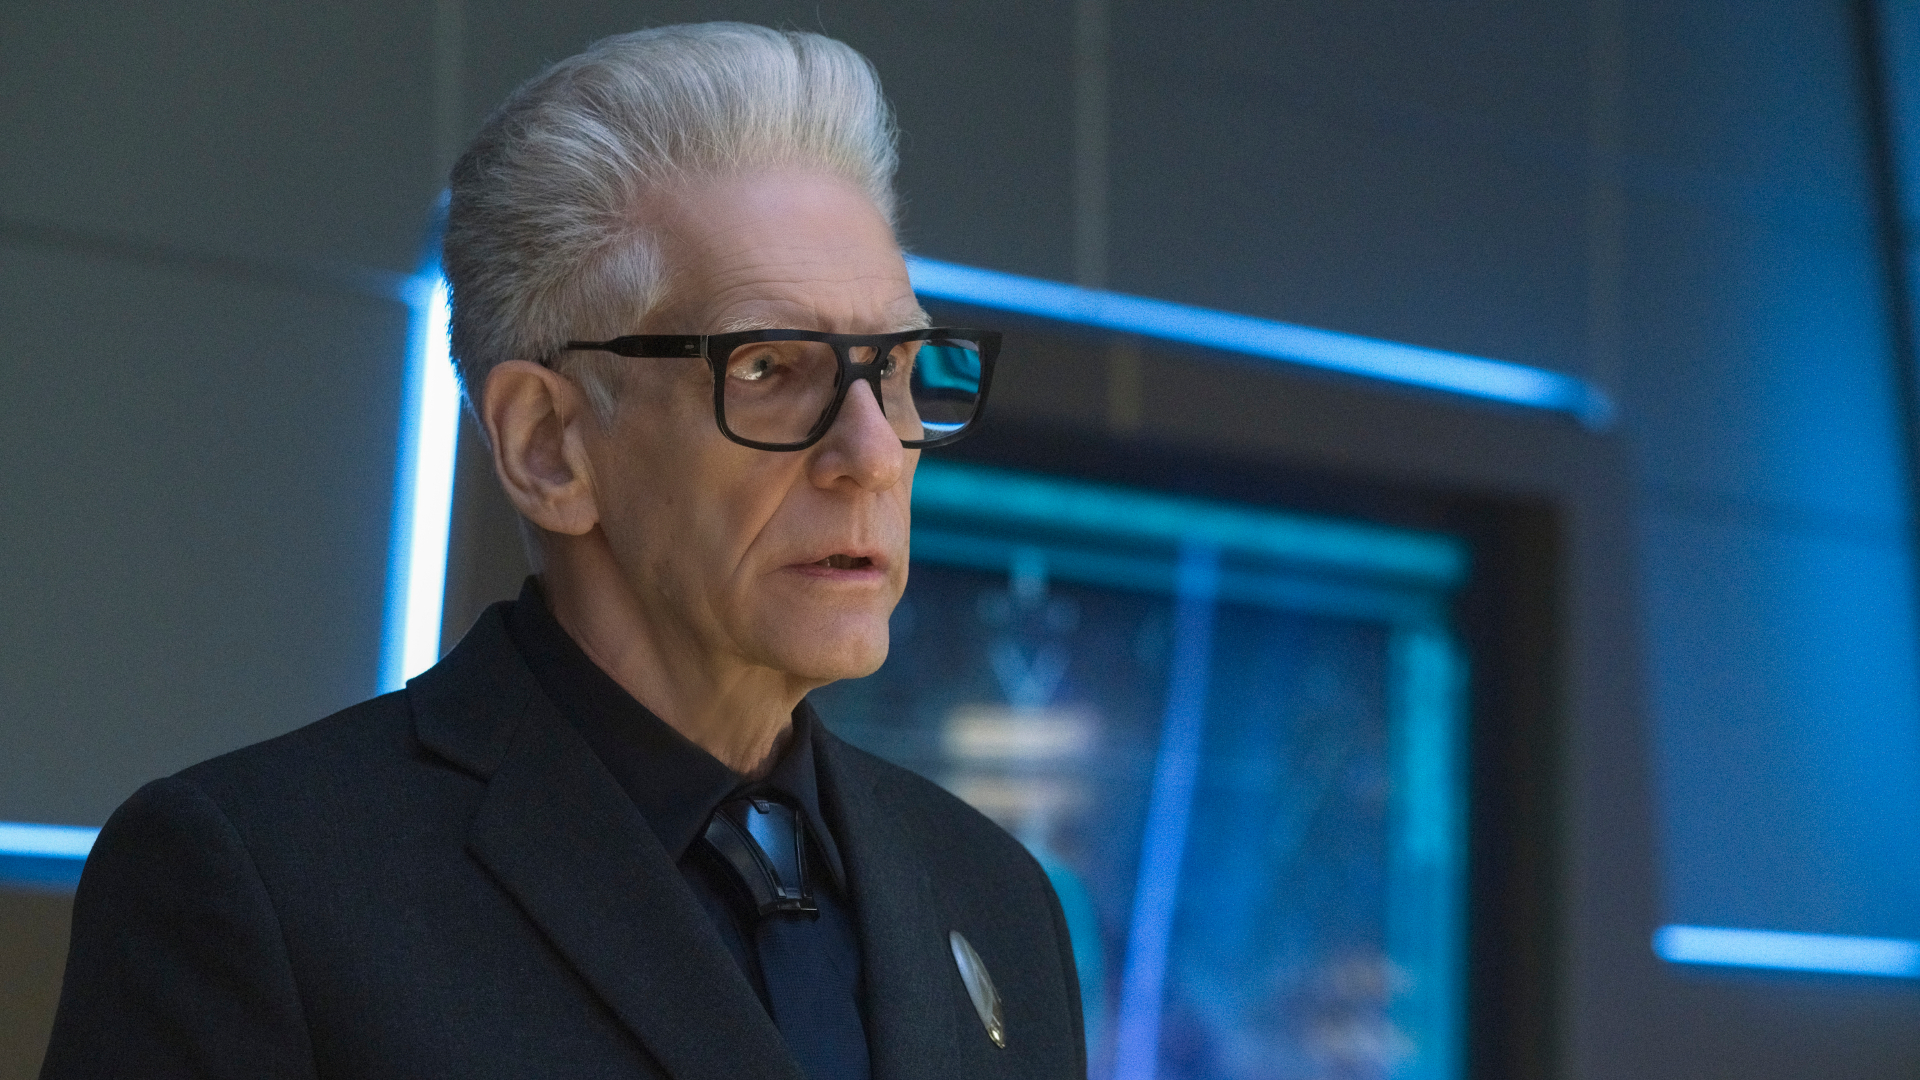 Dr. Kovich, played by David Cronenberg, in Star Trek Discovery.